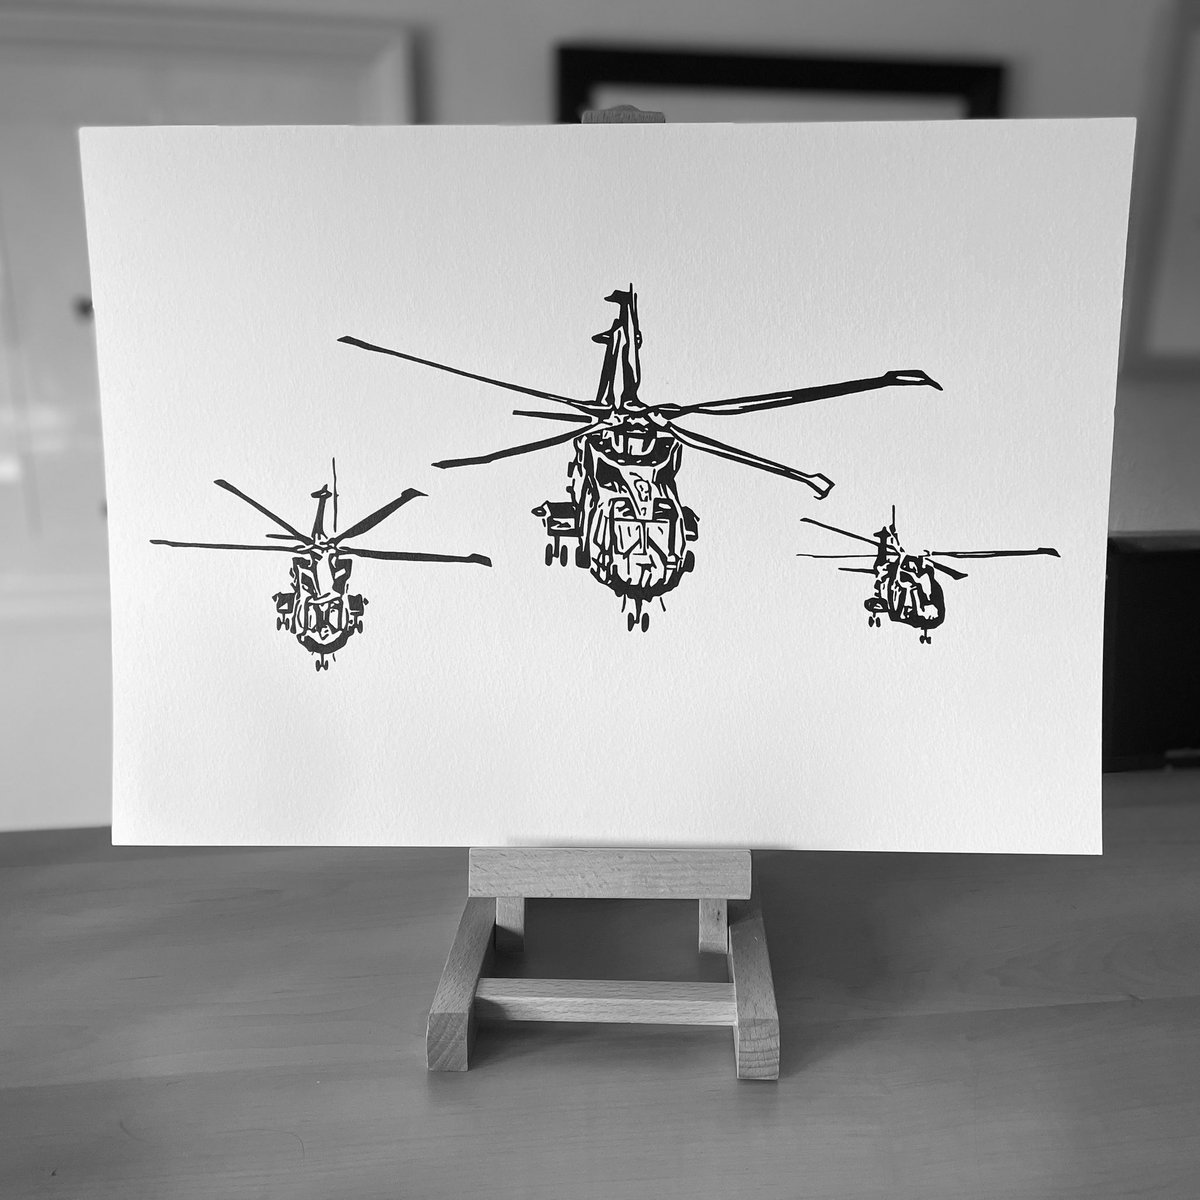 #merlinmonday

#merlin #flynavy #royalnavy #chf #846nas #845nas #rnasyeovilton #rnasculdrose #aviationart #aviation #helicopter #inkdrawing #printsavailable #commissionsavailable